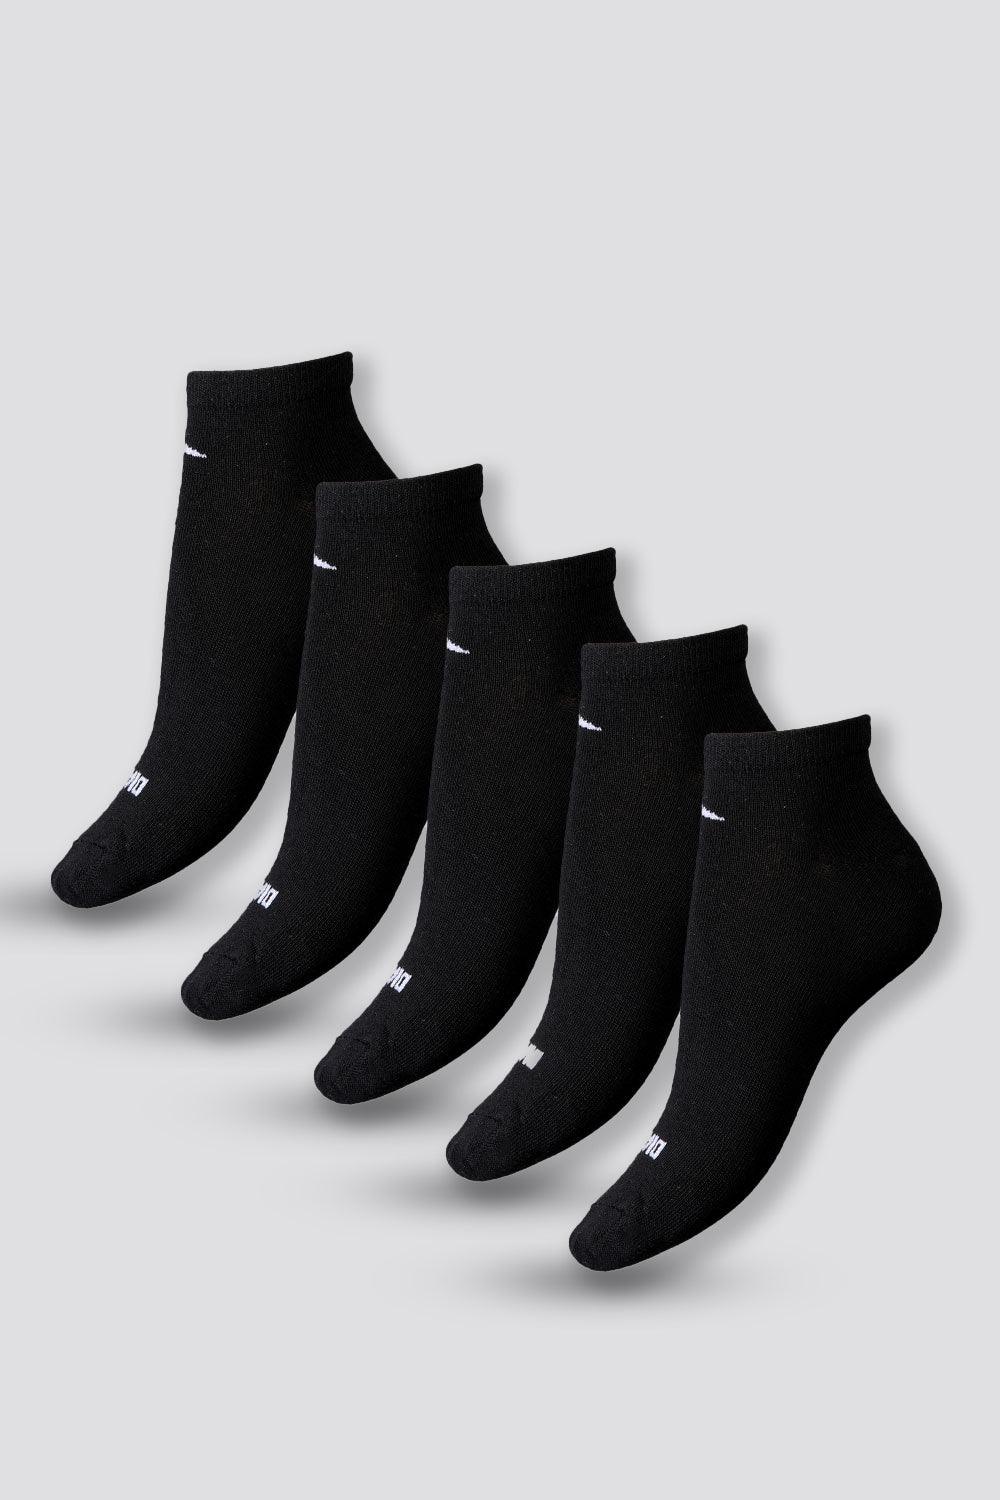 DIADORA - 5 זוגות גרביים אורך קצר 41-46 שחור/לבן - MASHBIR//365